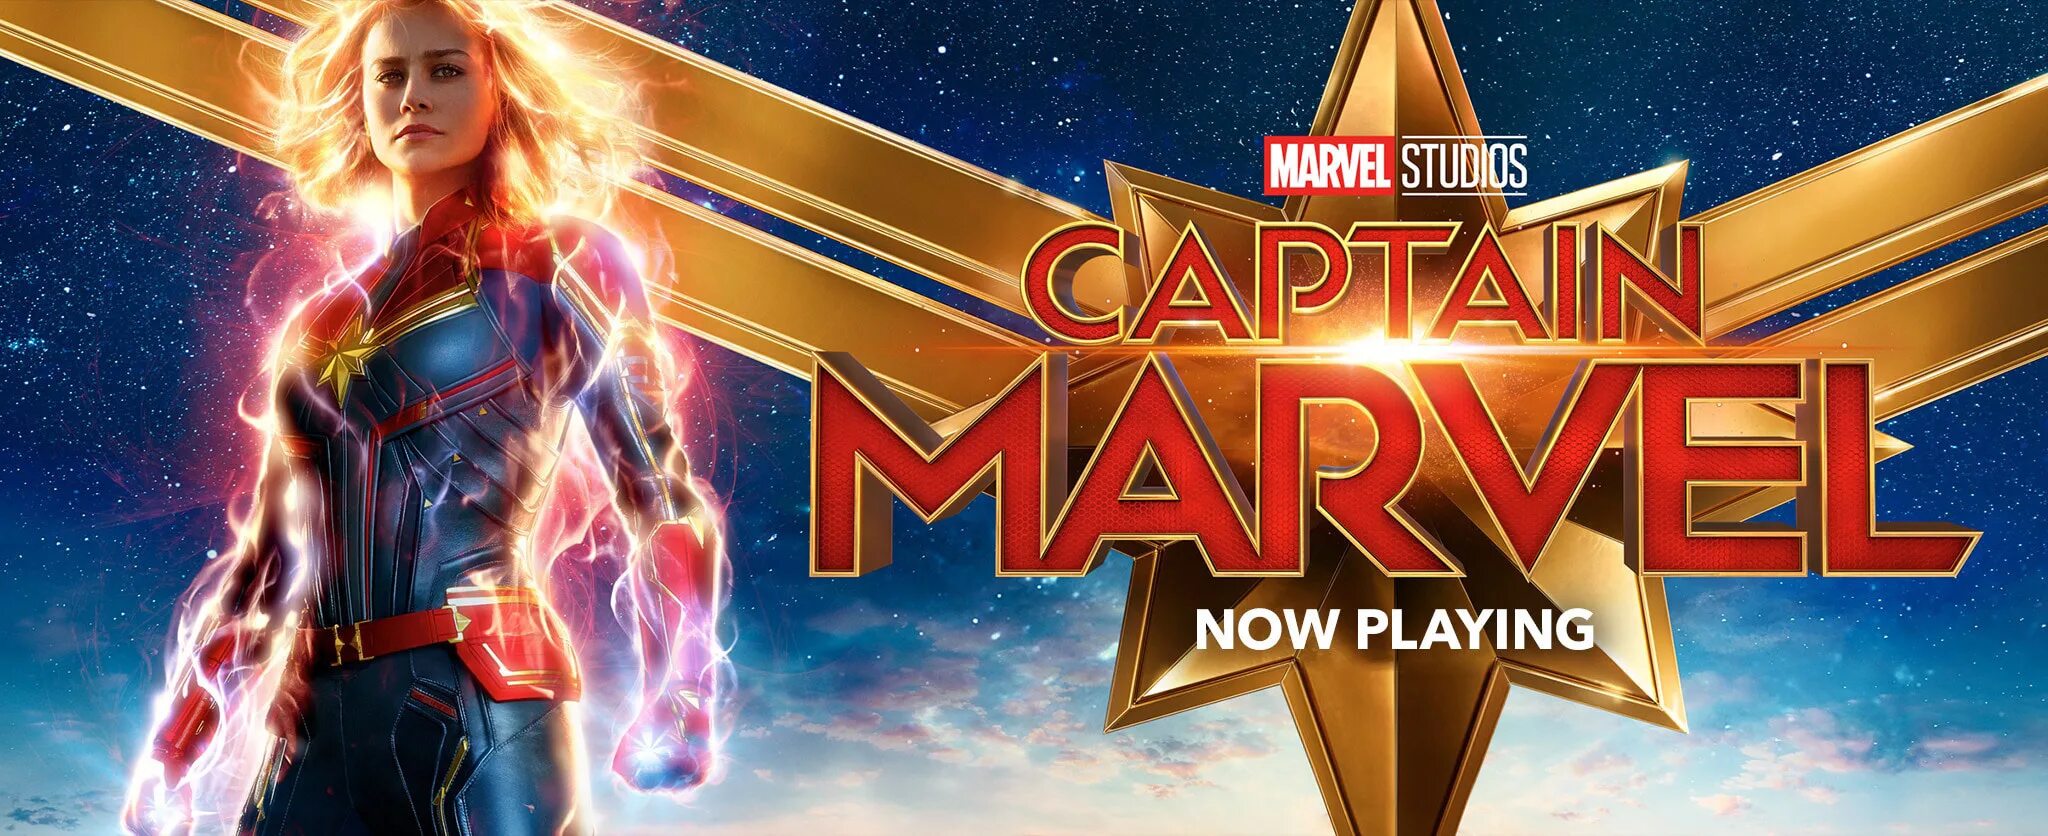 Марвел март. Капитан Марвел 2019. Капитан Марвел 16+. Капитан Марвел 2 Постер.